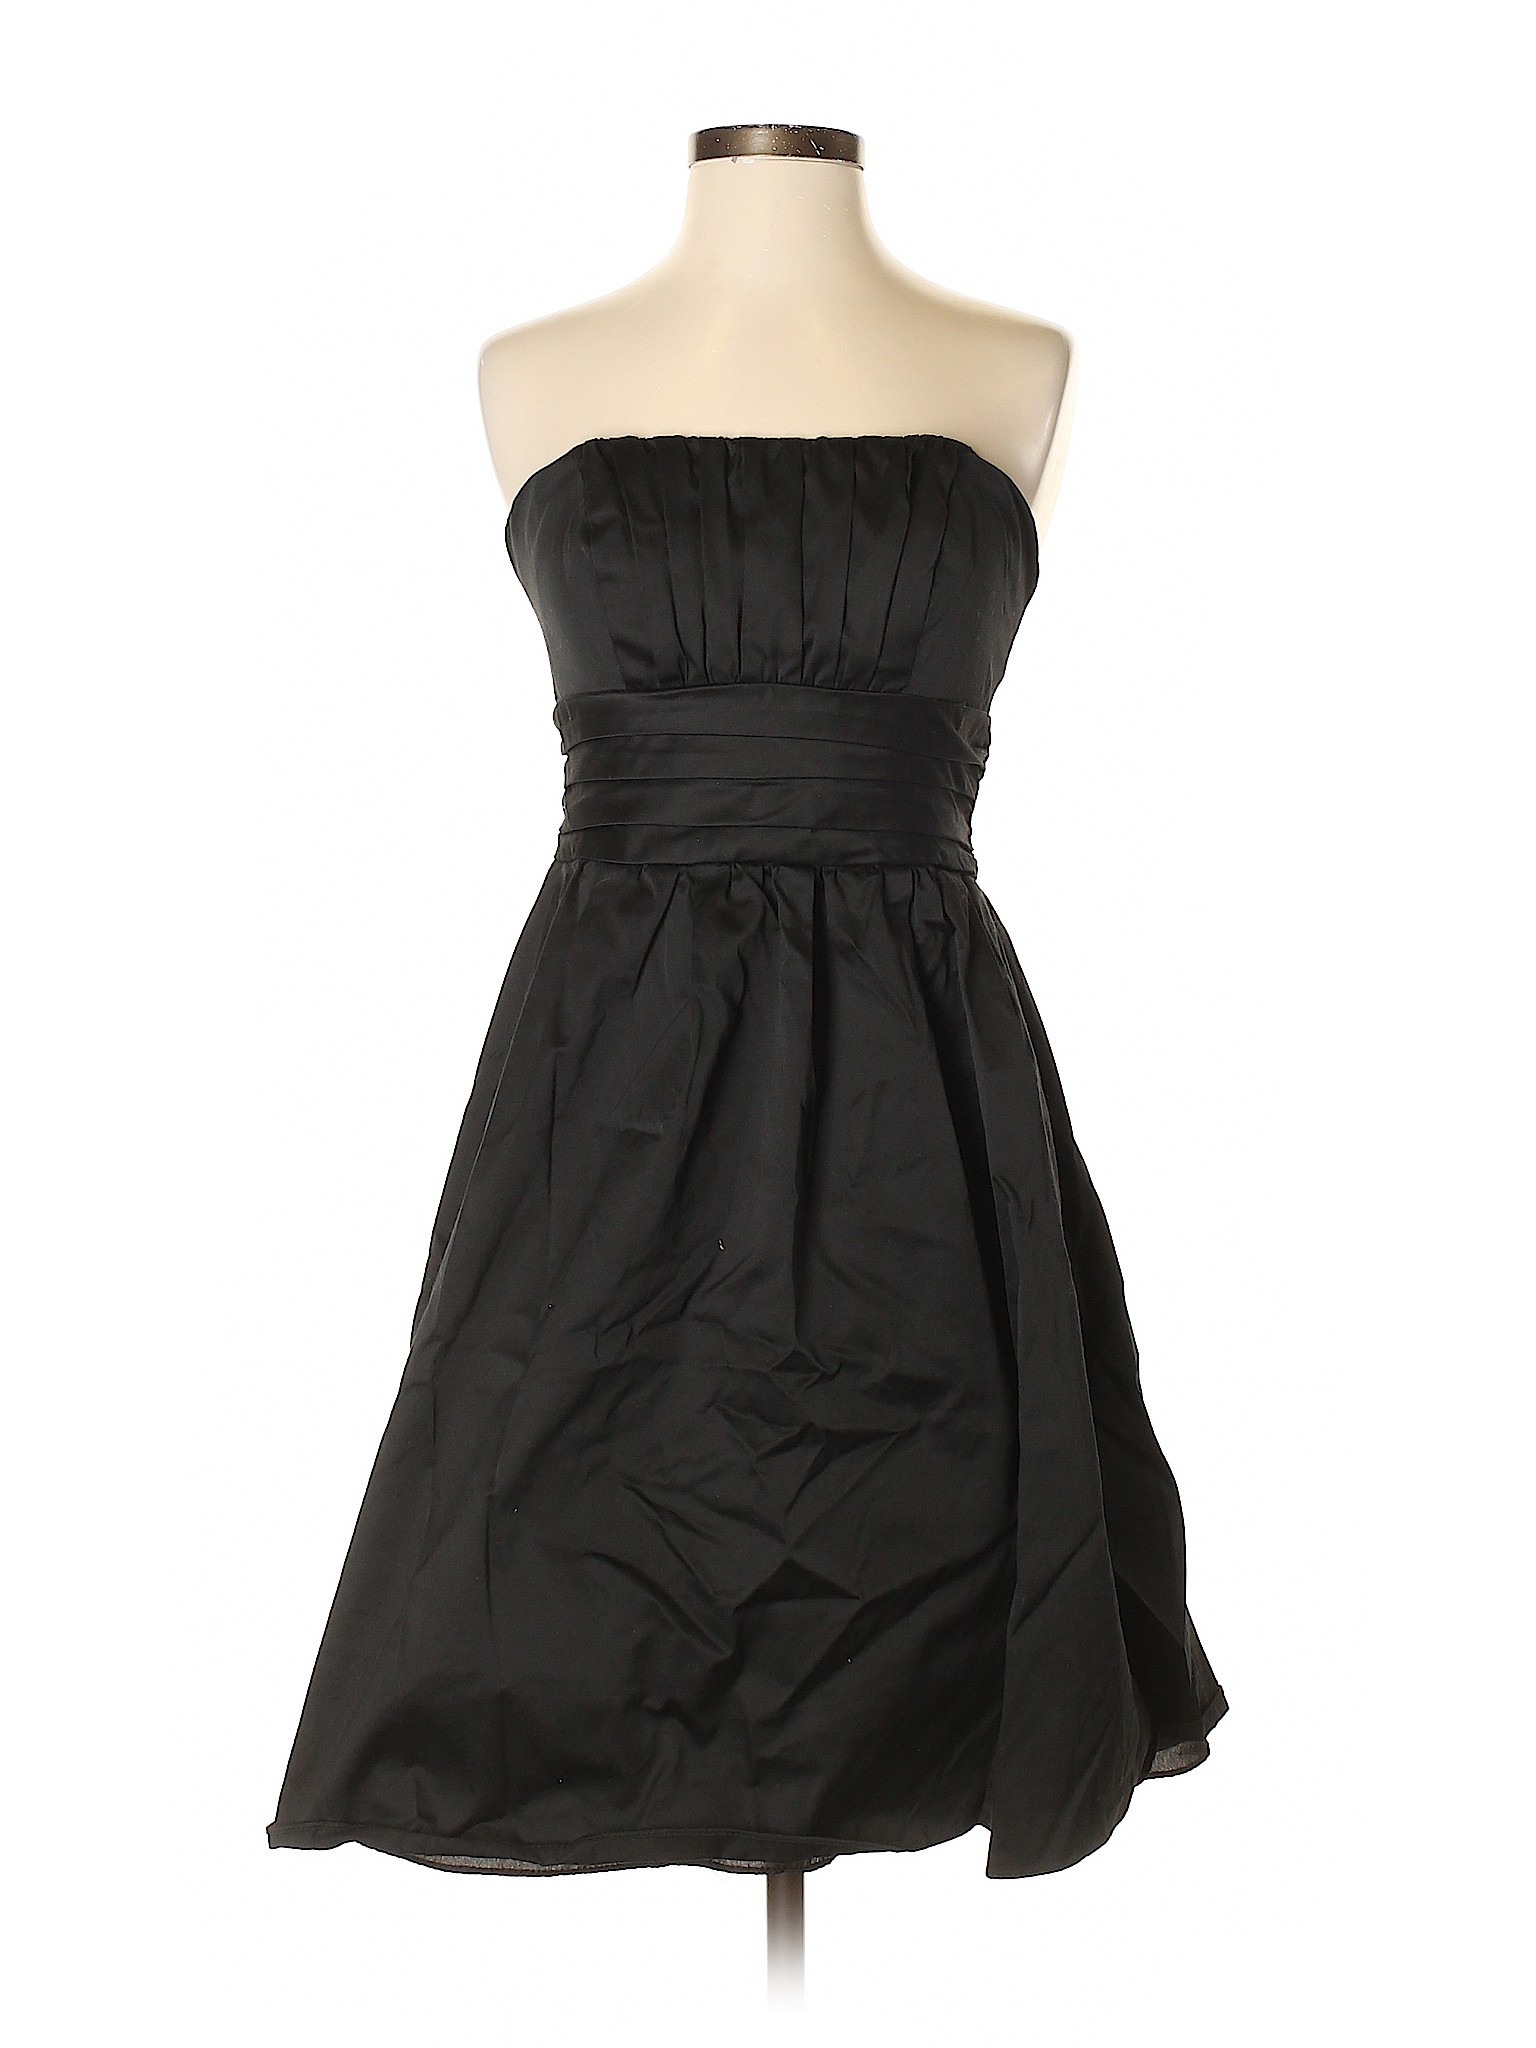 David's Bridal Women Black Cocktail Dress 6 | eBay